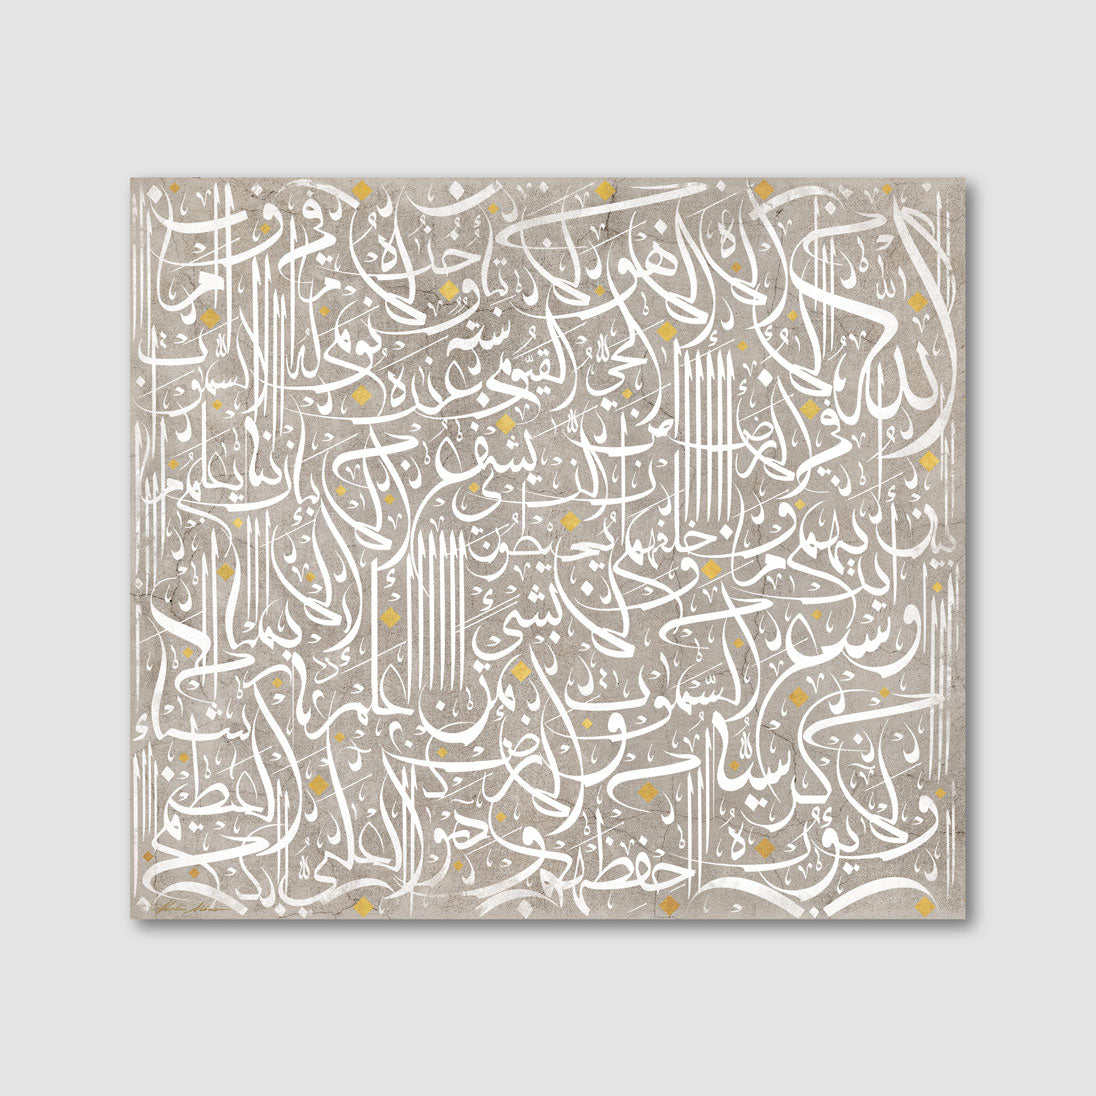 Ayatul Kursi Islamic Arabic Calligraphy canvas art print by artist Helen Abbas for The Art Gallery